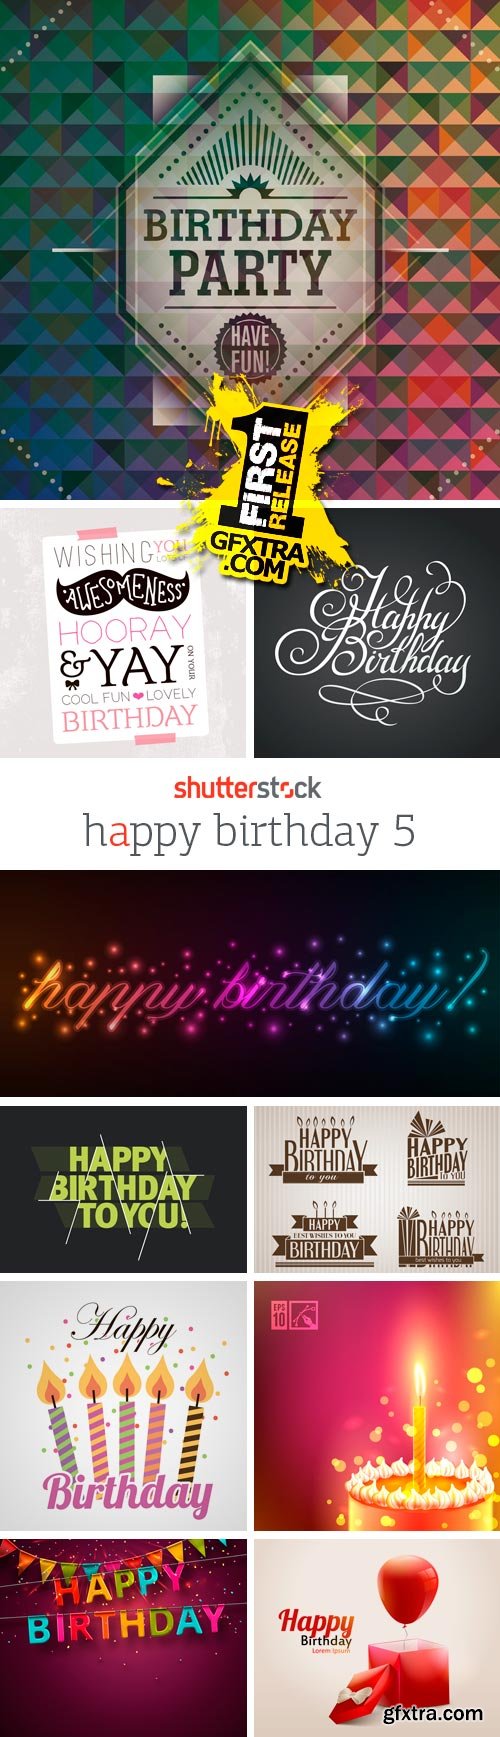 Amazing SS - Happy Birthday 5, 25xEPS